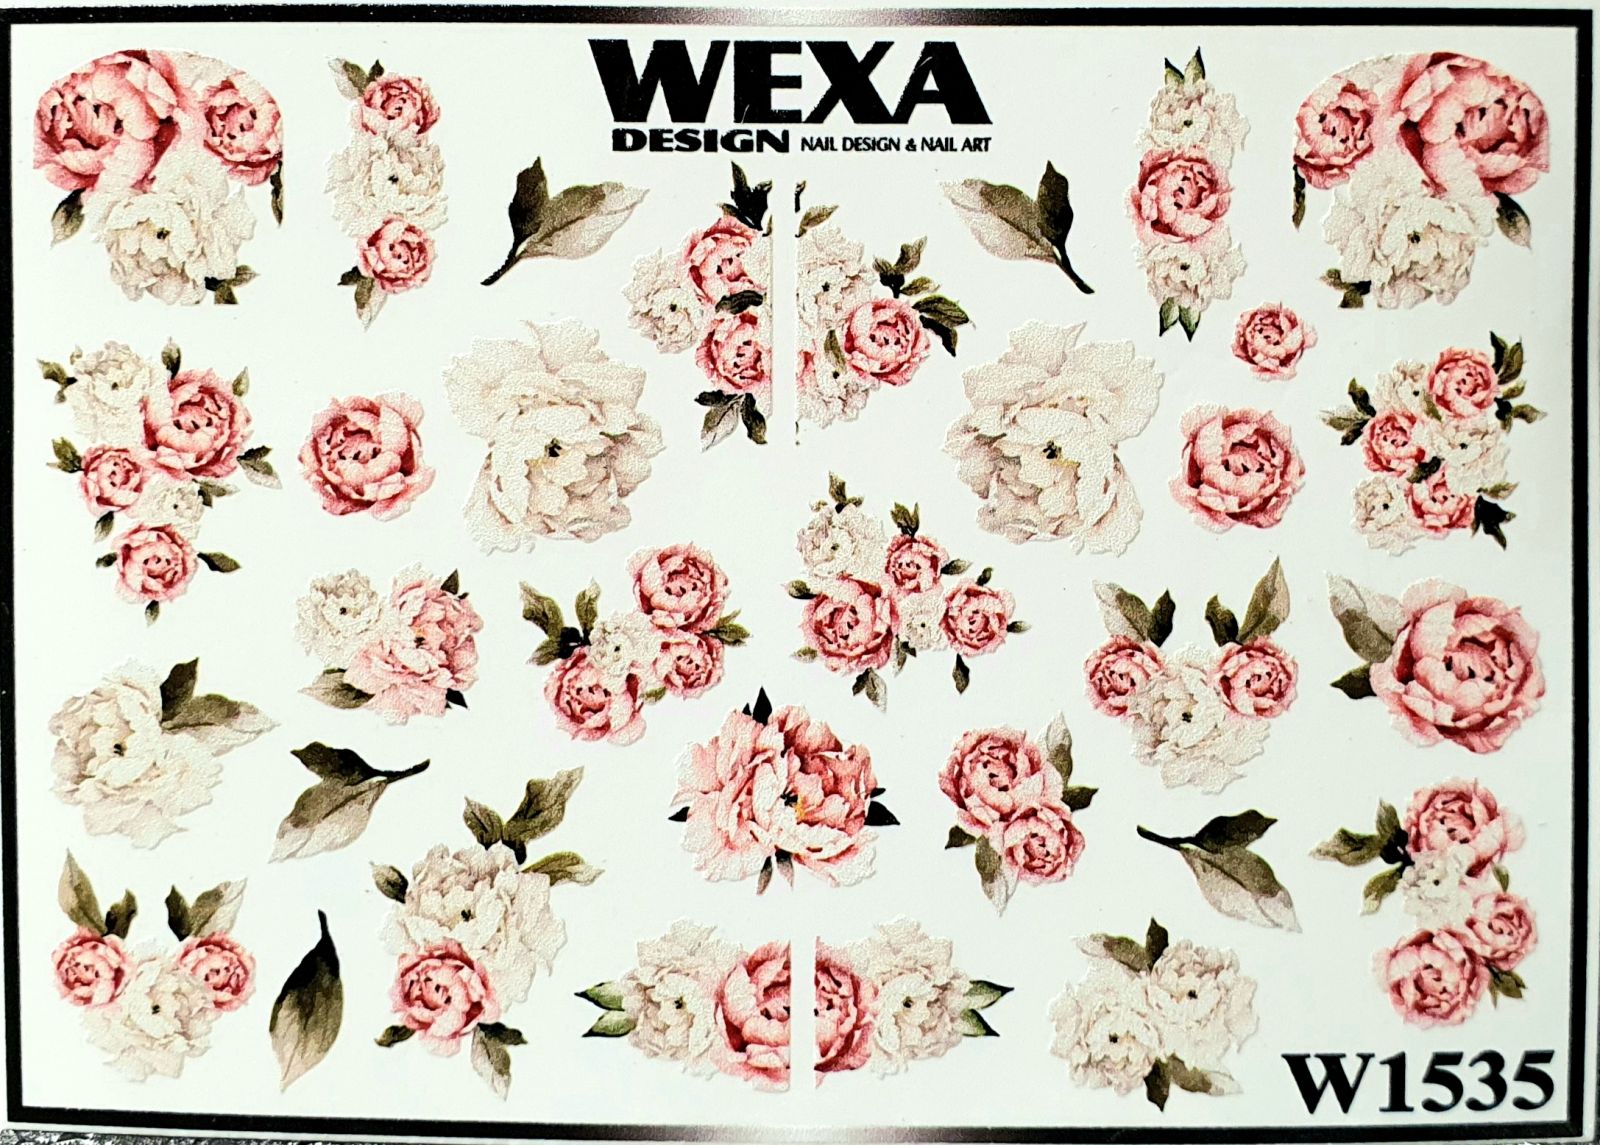 WEXA vodolepky nevyžadujúce bledý podklad W1535